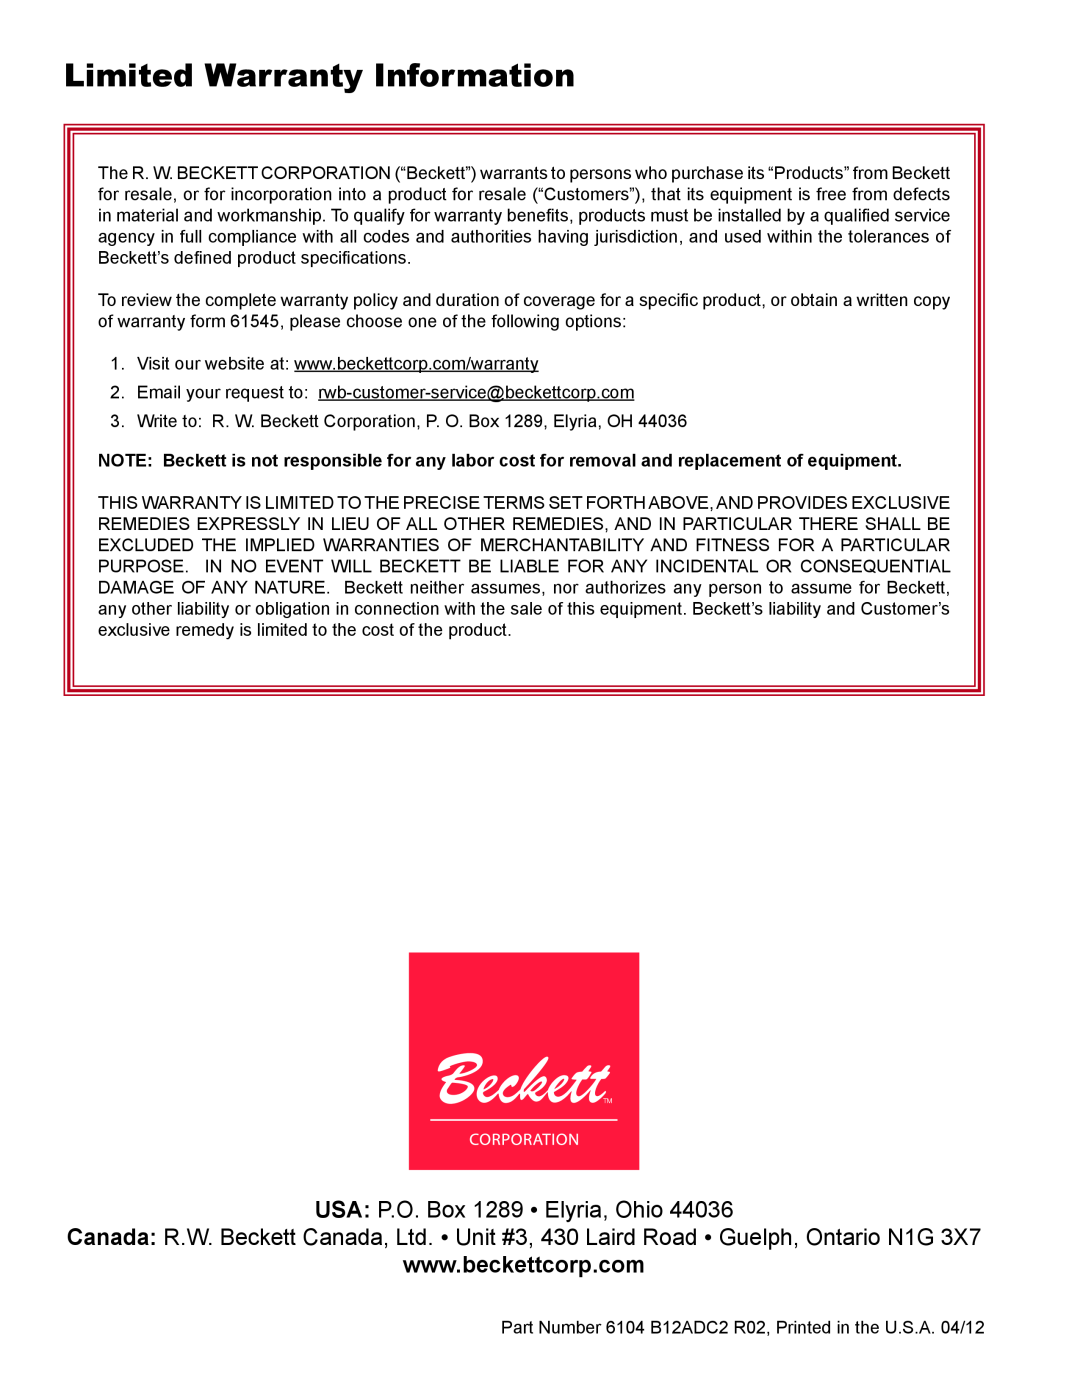 Beckett ADC manual Limited Warranty Information, USA P.O. Box 1289 Elyria, Ohio 